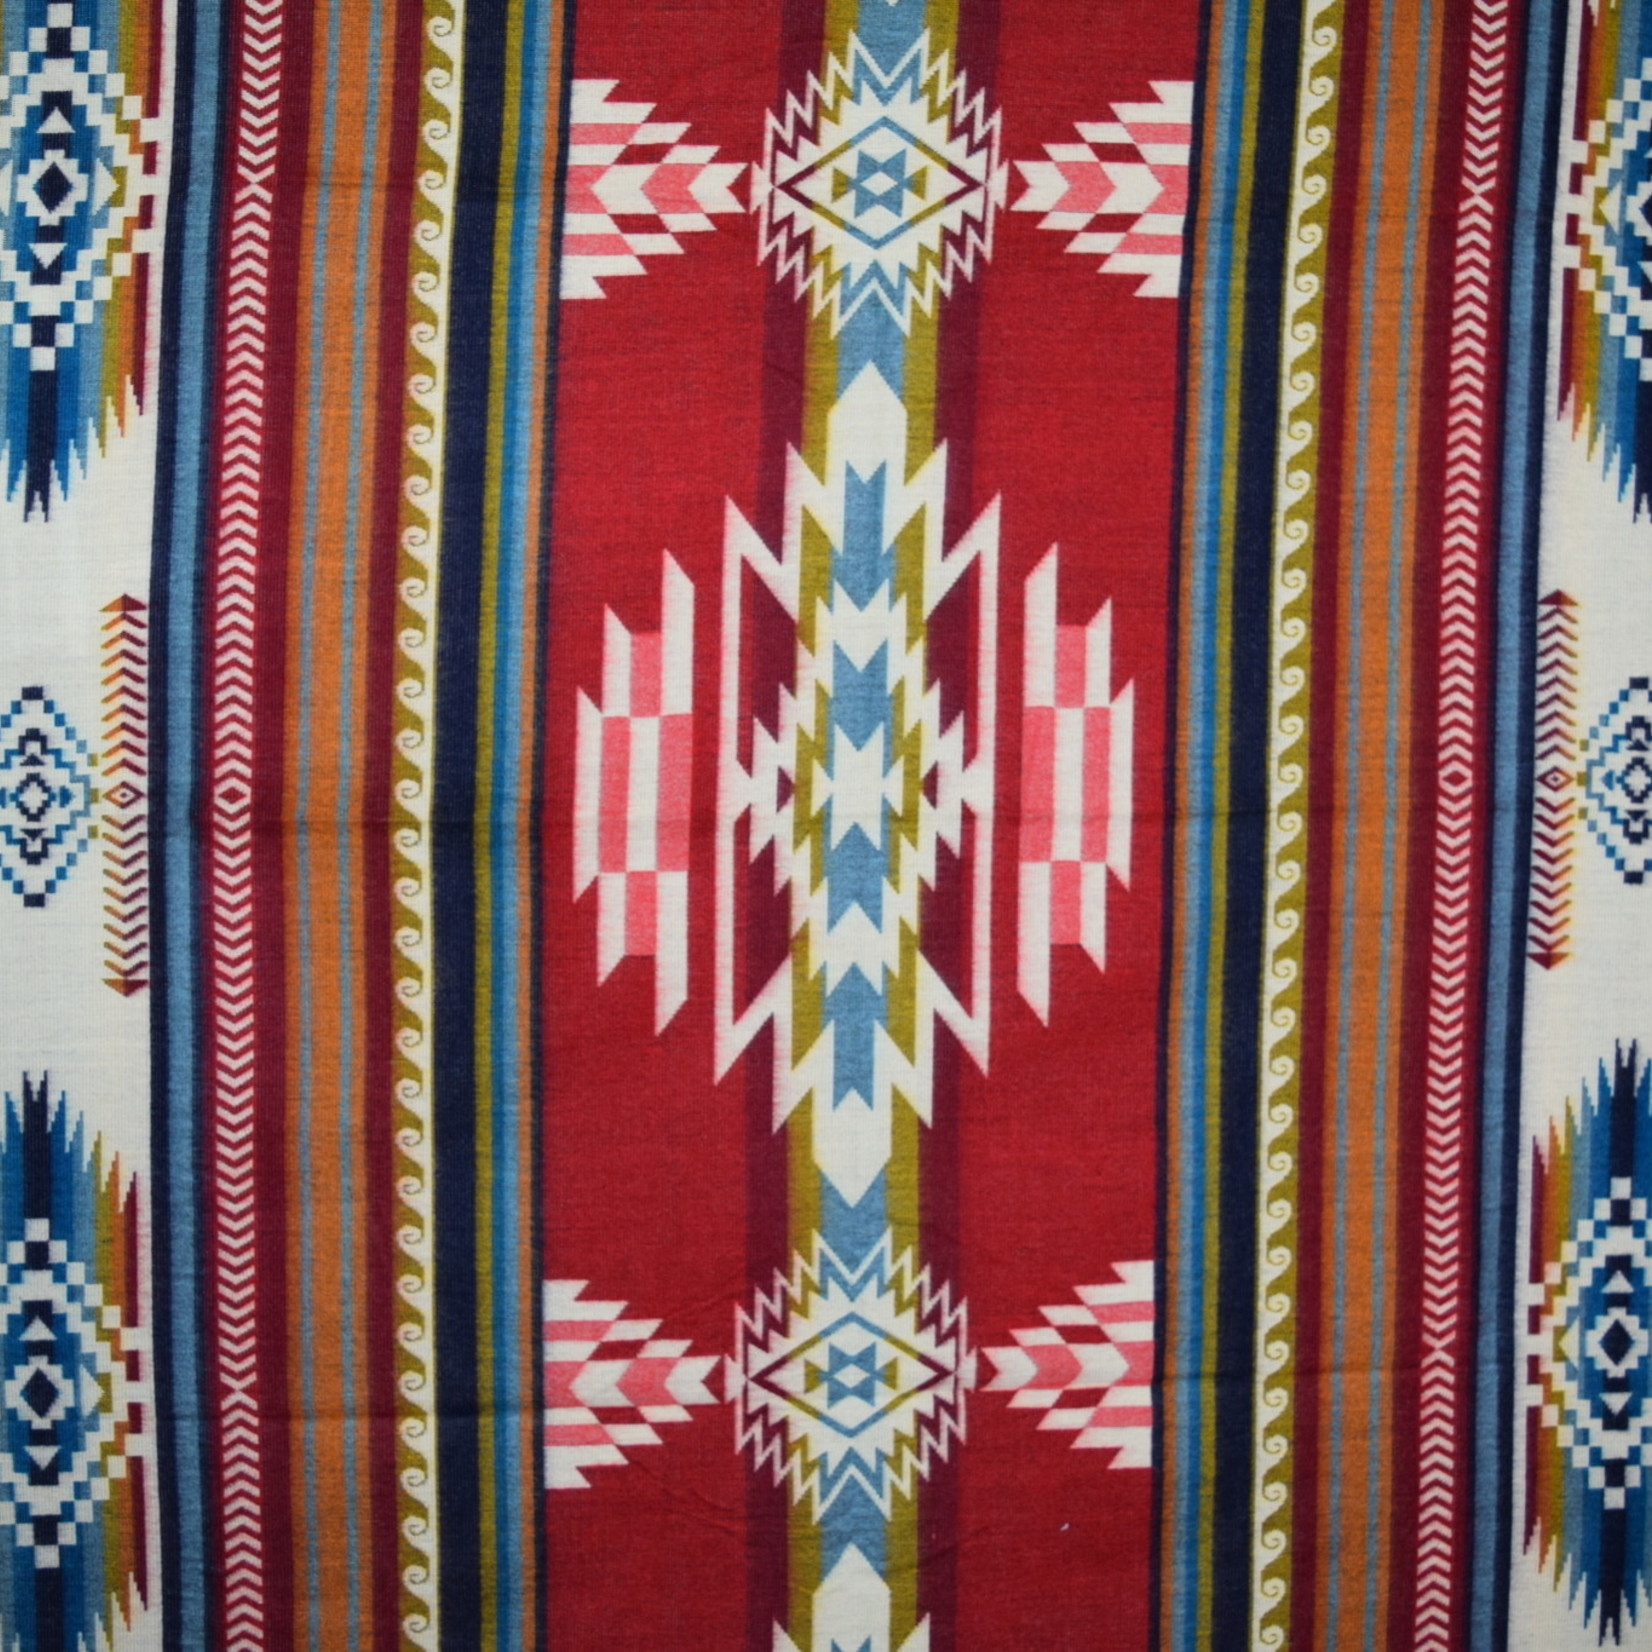 Wool Blankets - Red Border Thread